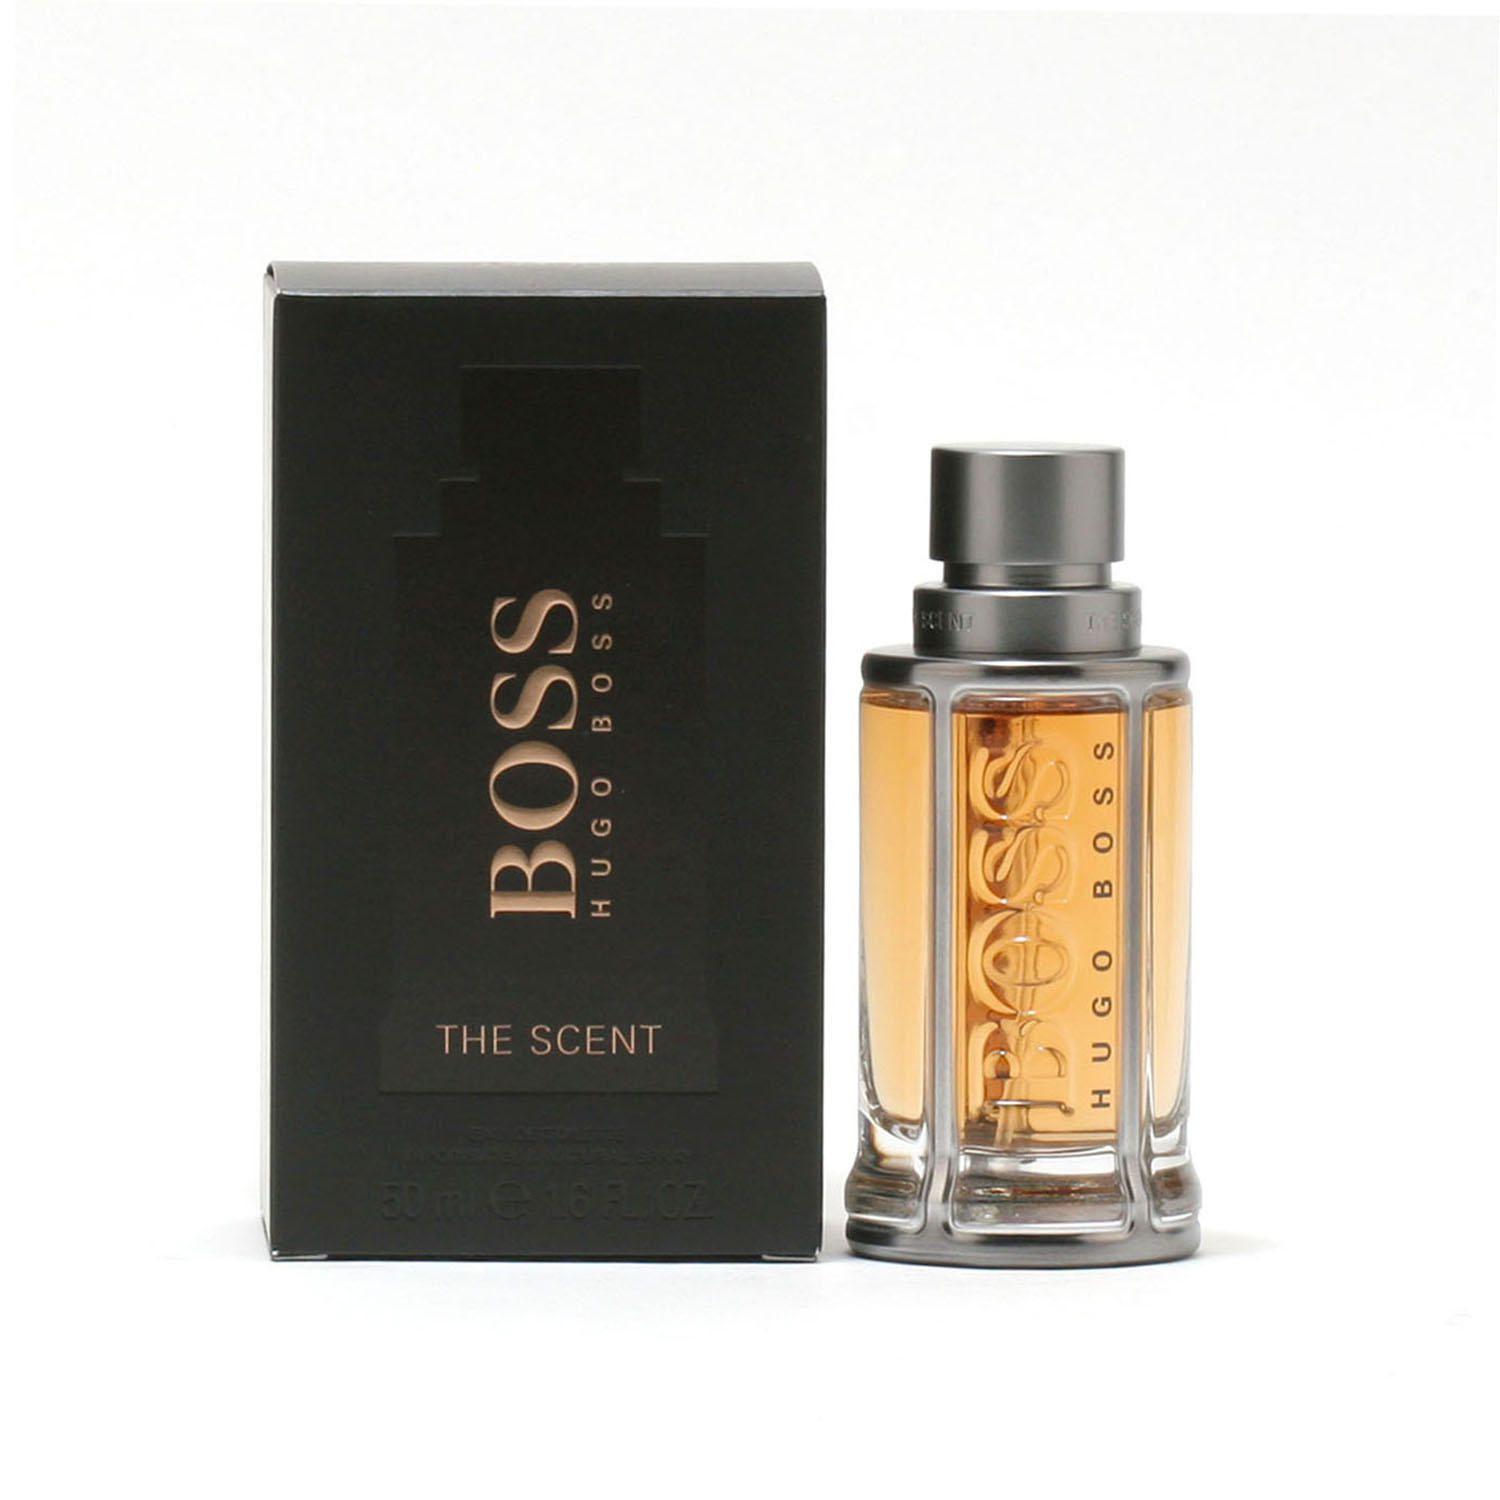 hugo boss parfum 50 ml